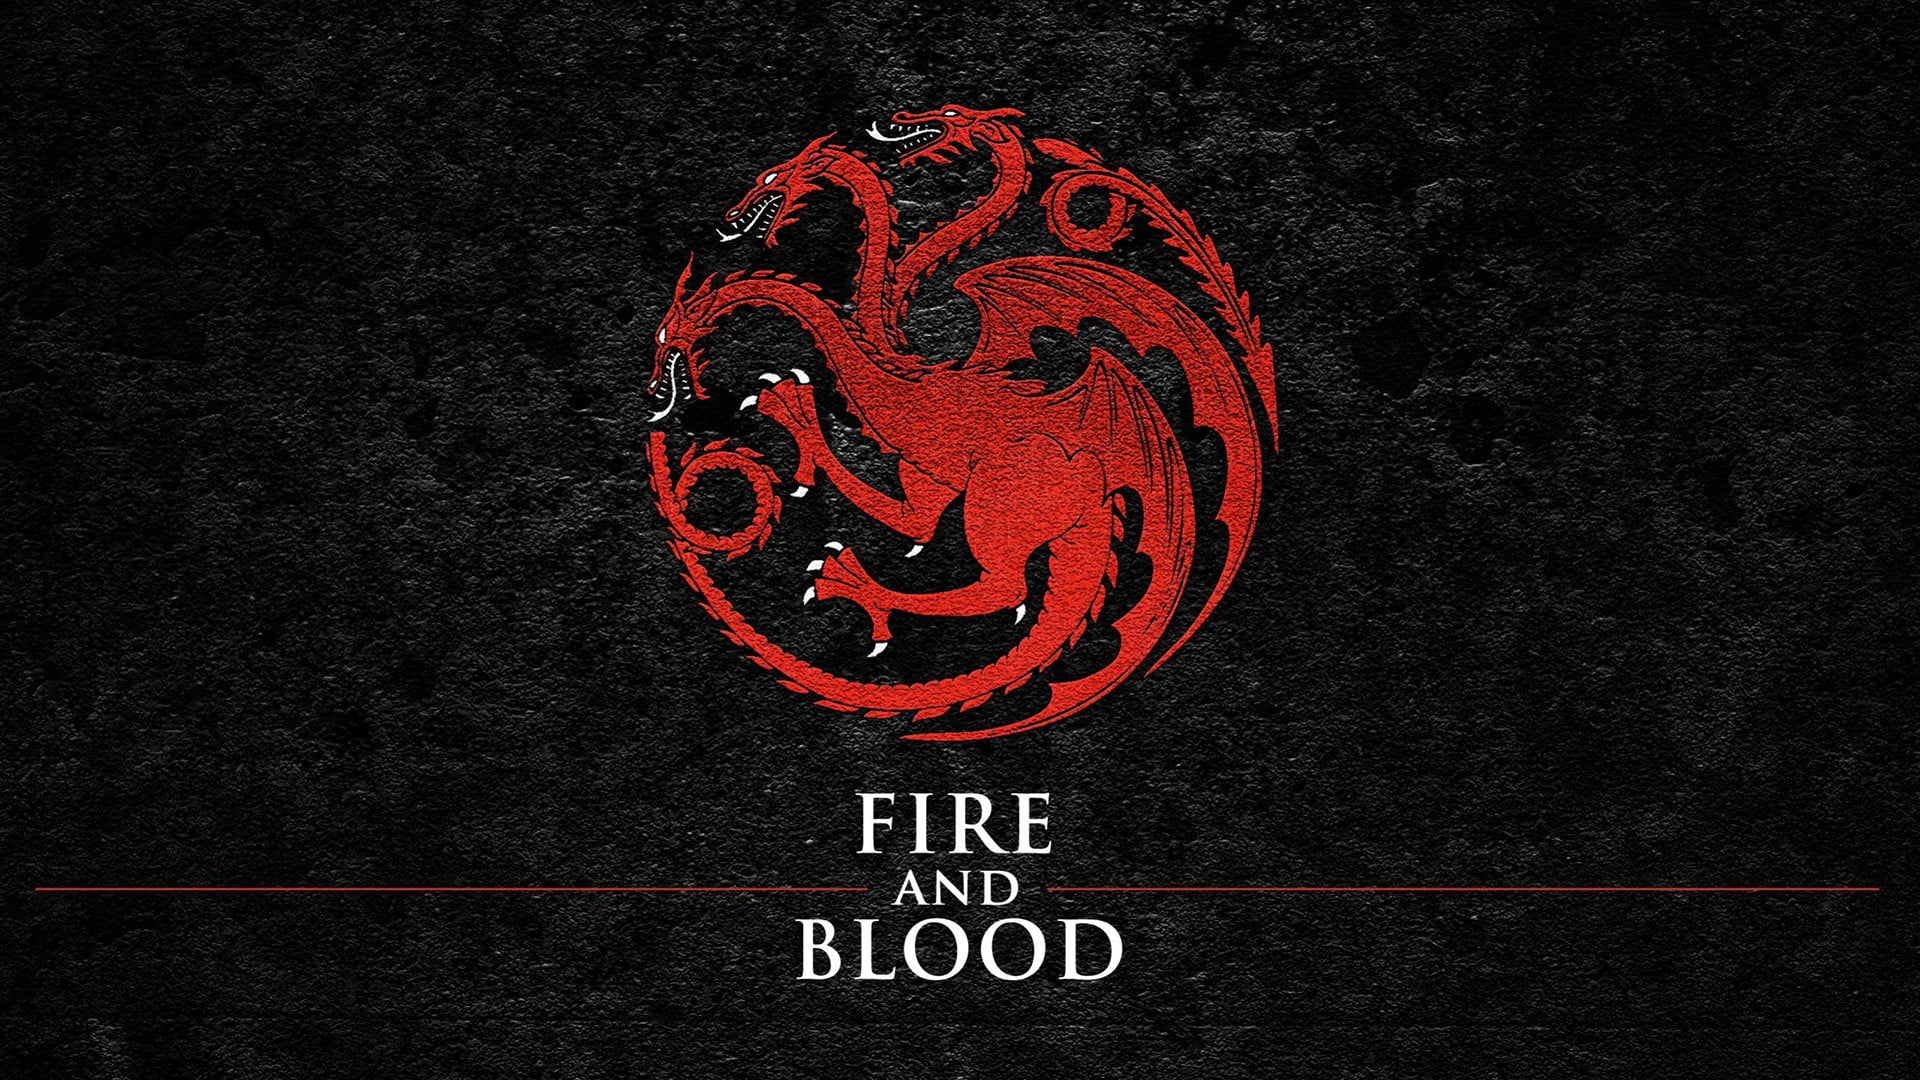 The Game of Thrones House of Targaryen logo, Game of Thrones, sigils